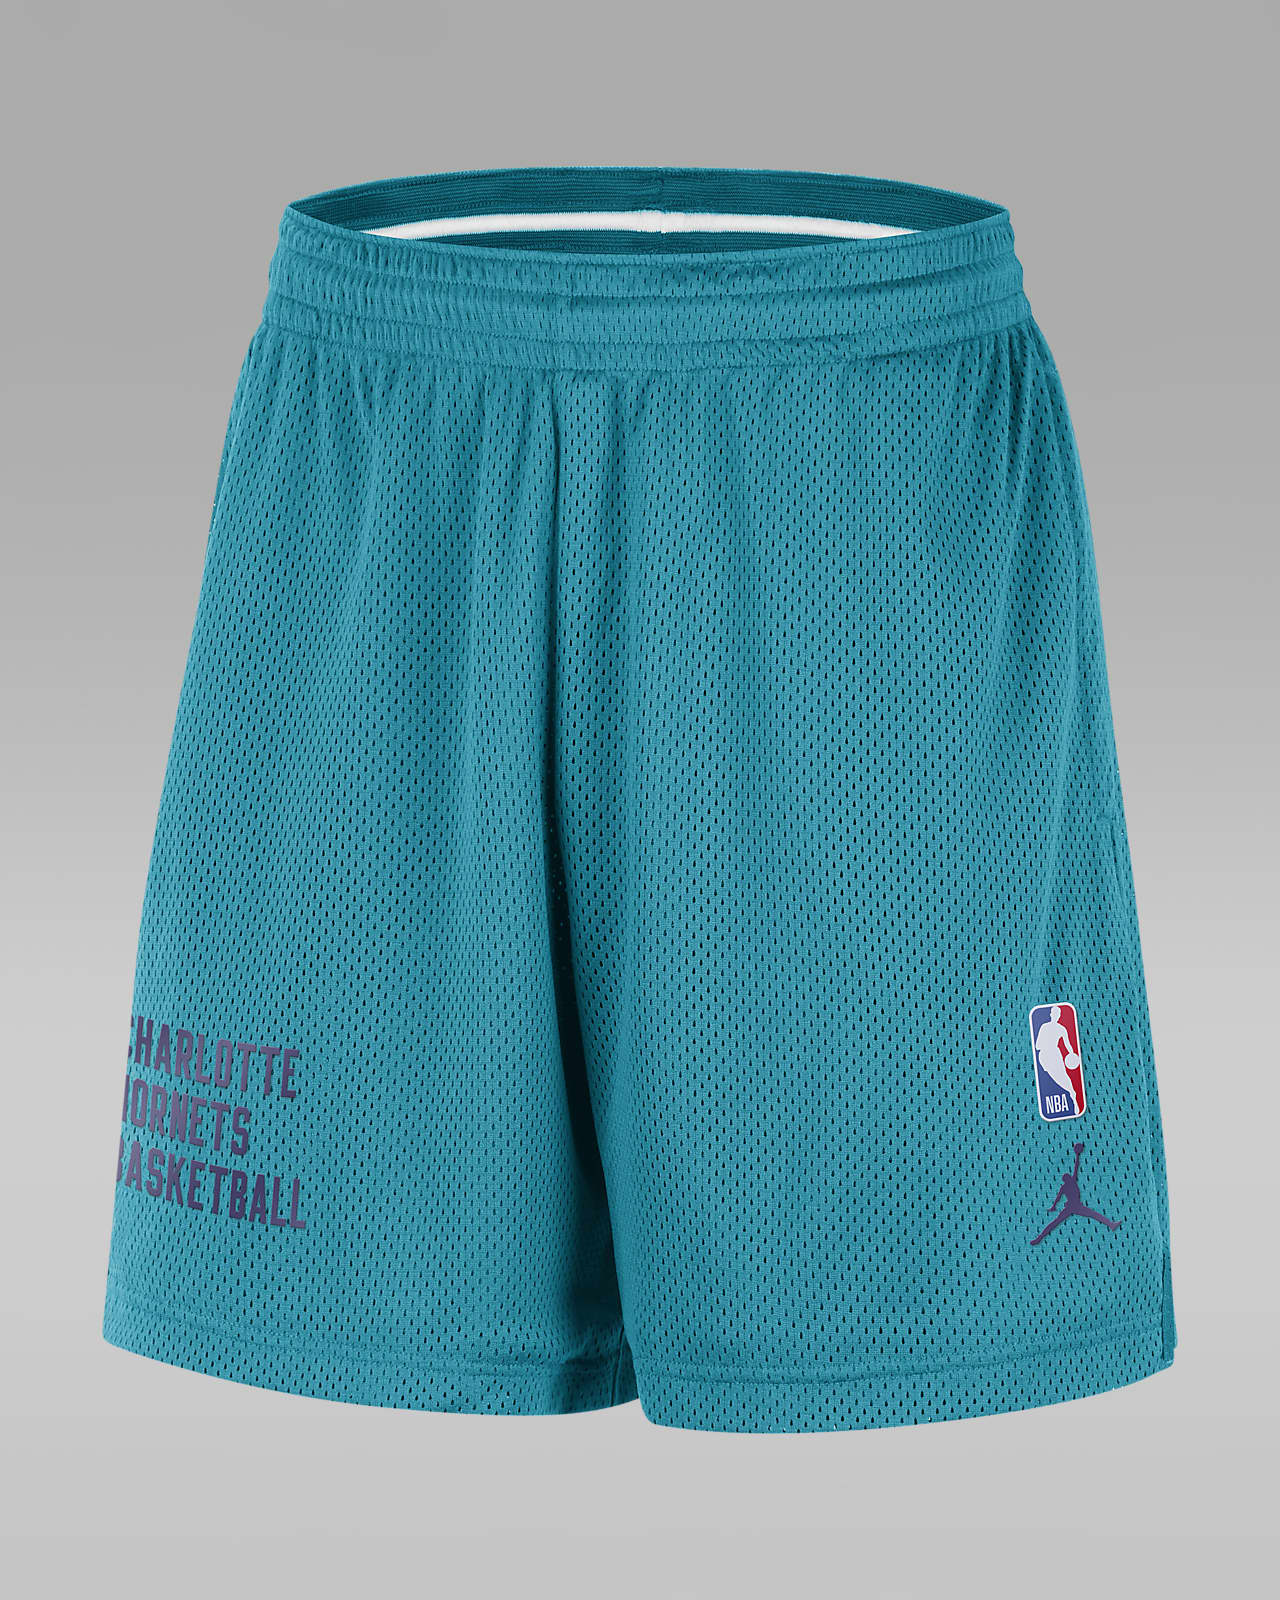 Charlotte Hornets Men's Nike NBA Mesh Shorts